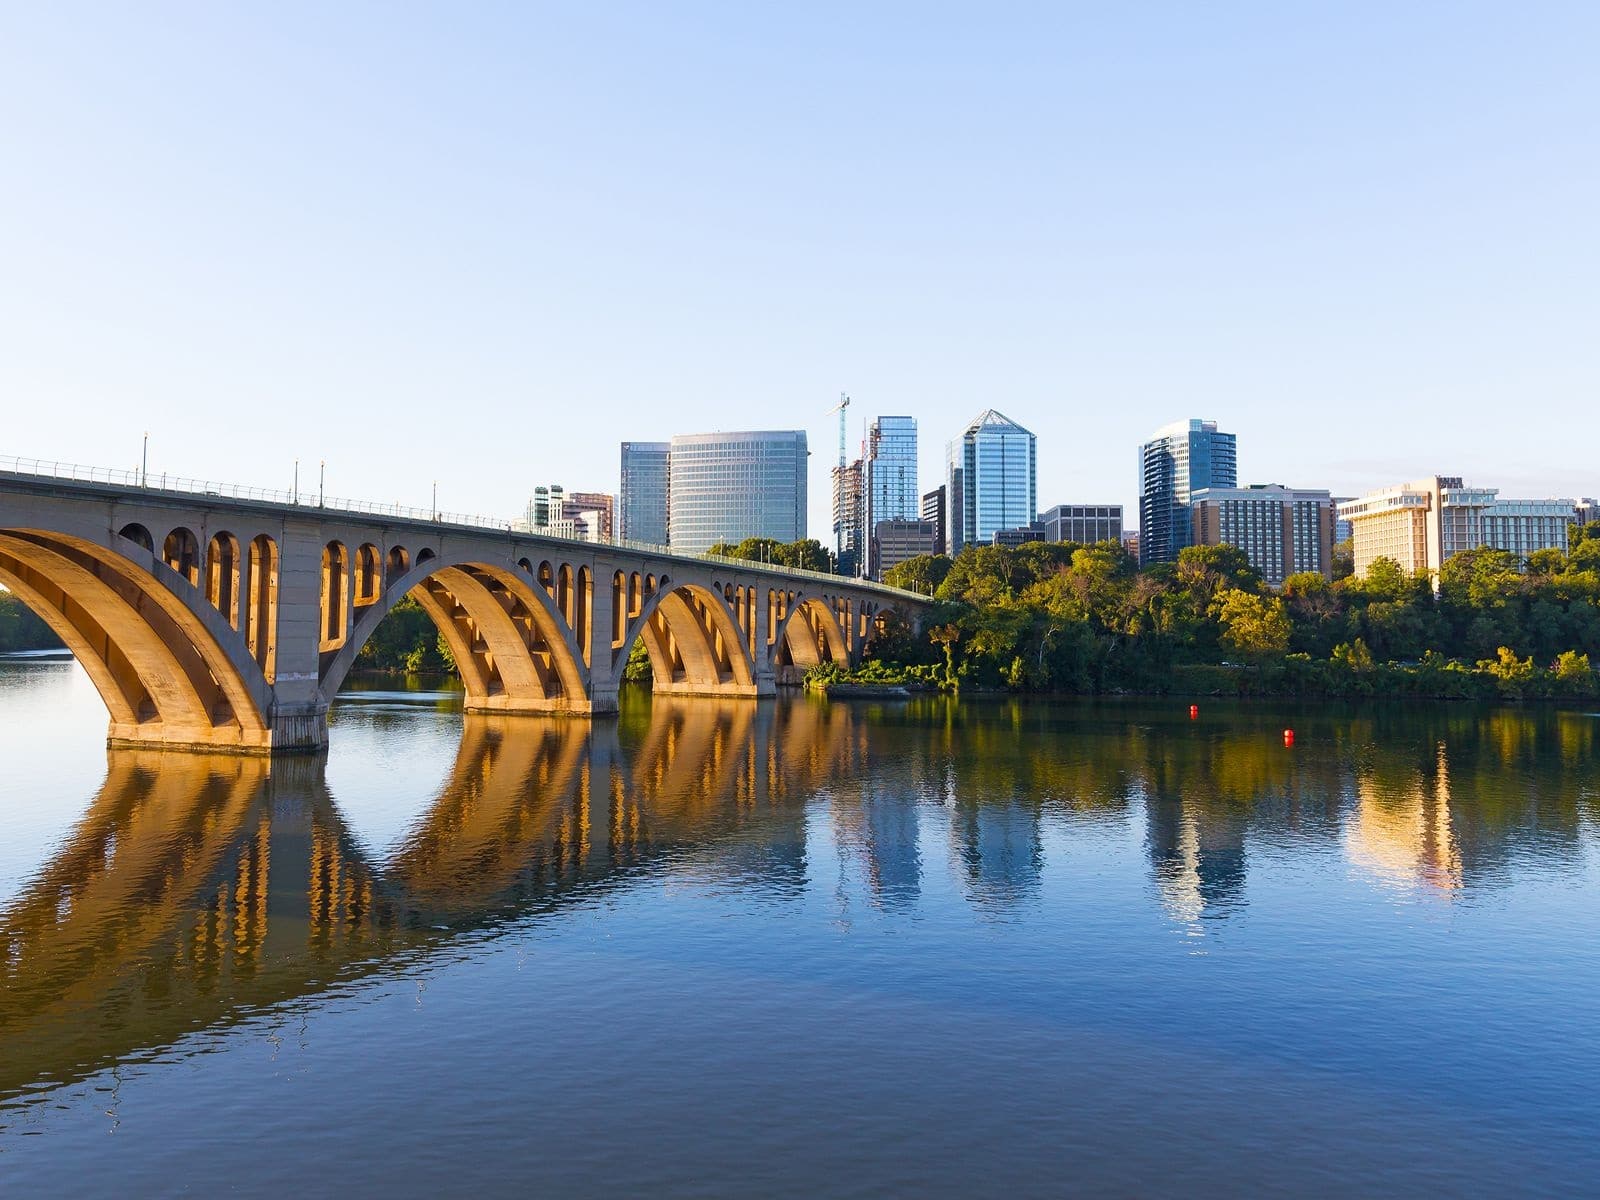 Photo of the Key Bridge spanning the Potomac River, connecting Washington, D.C., with Arlington, Va. for the M-Enabling blog